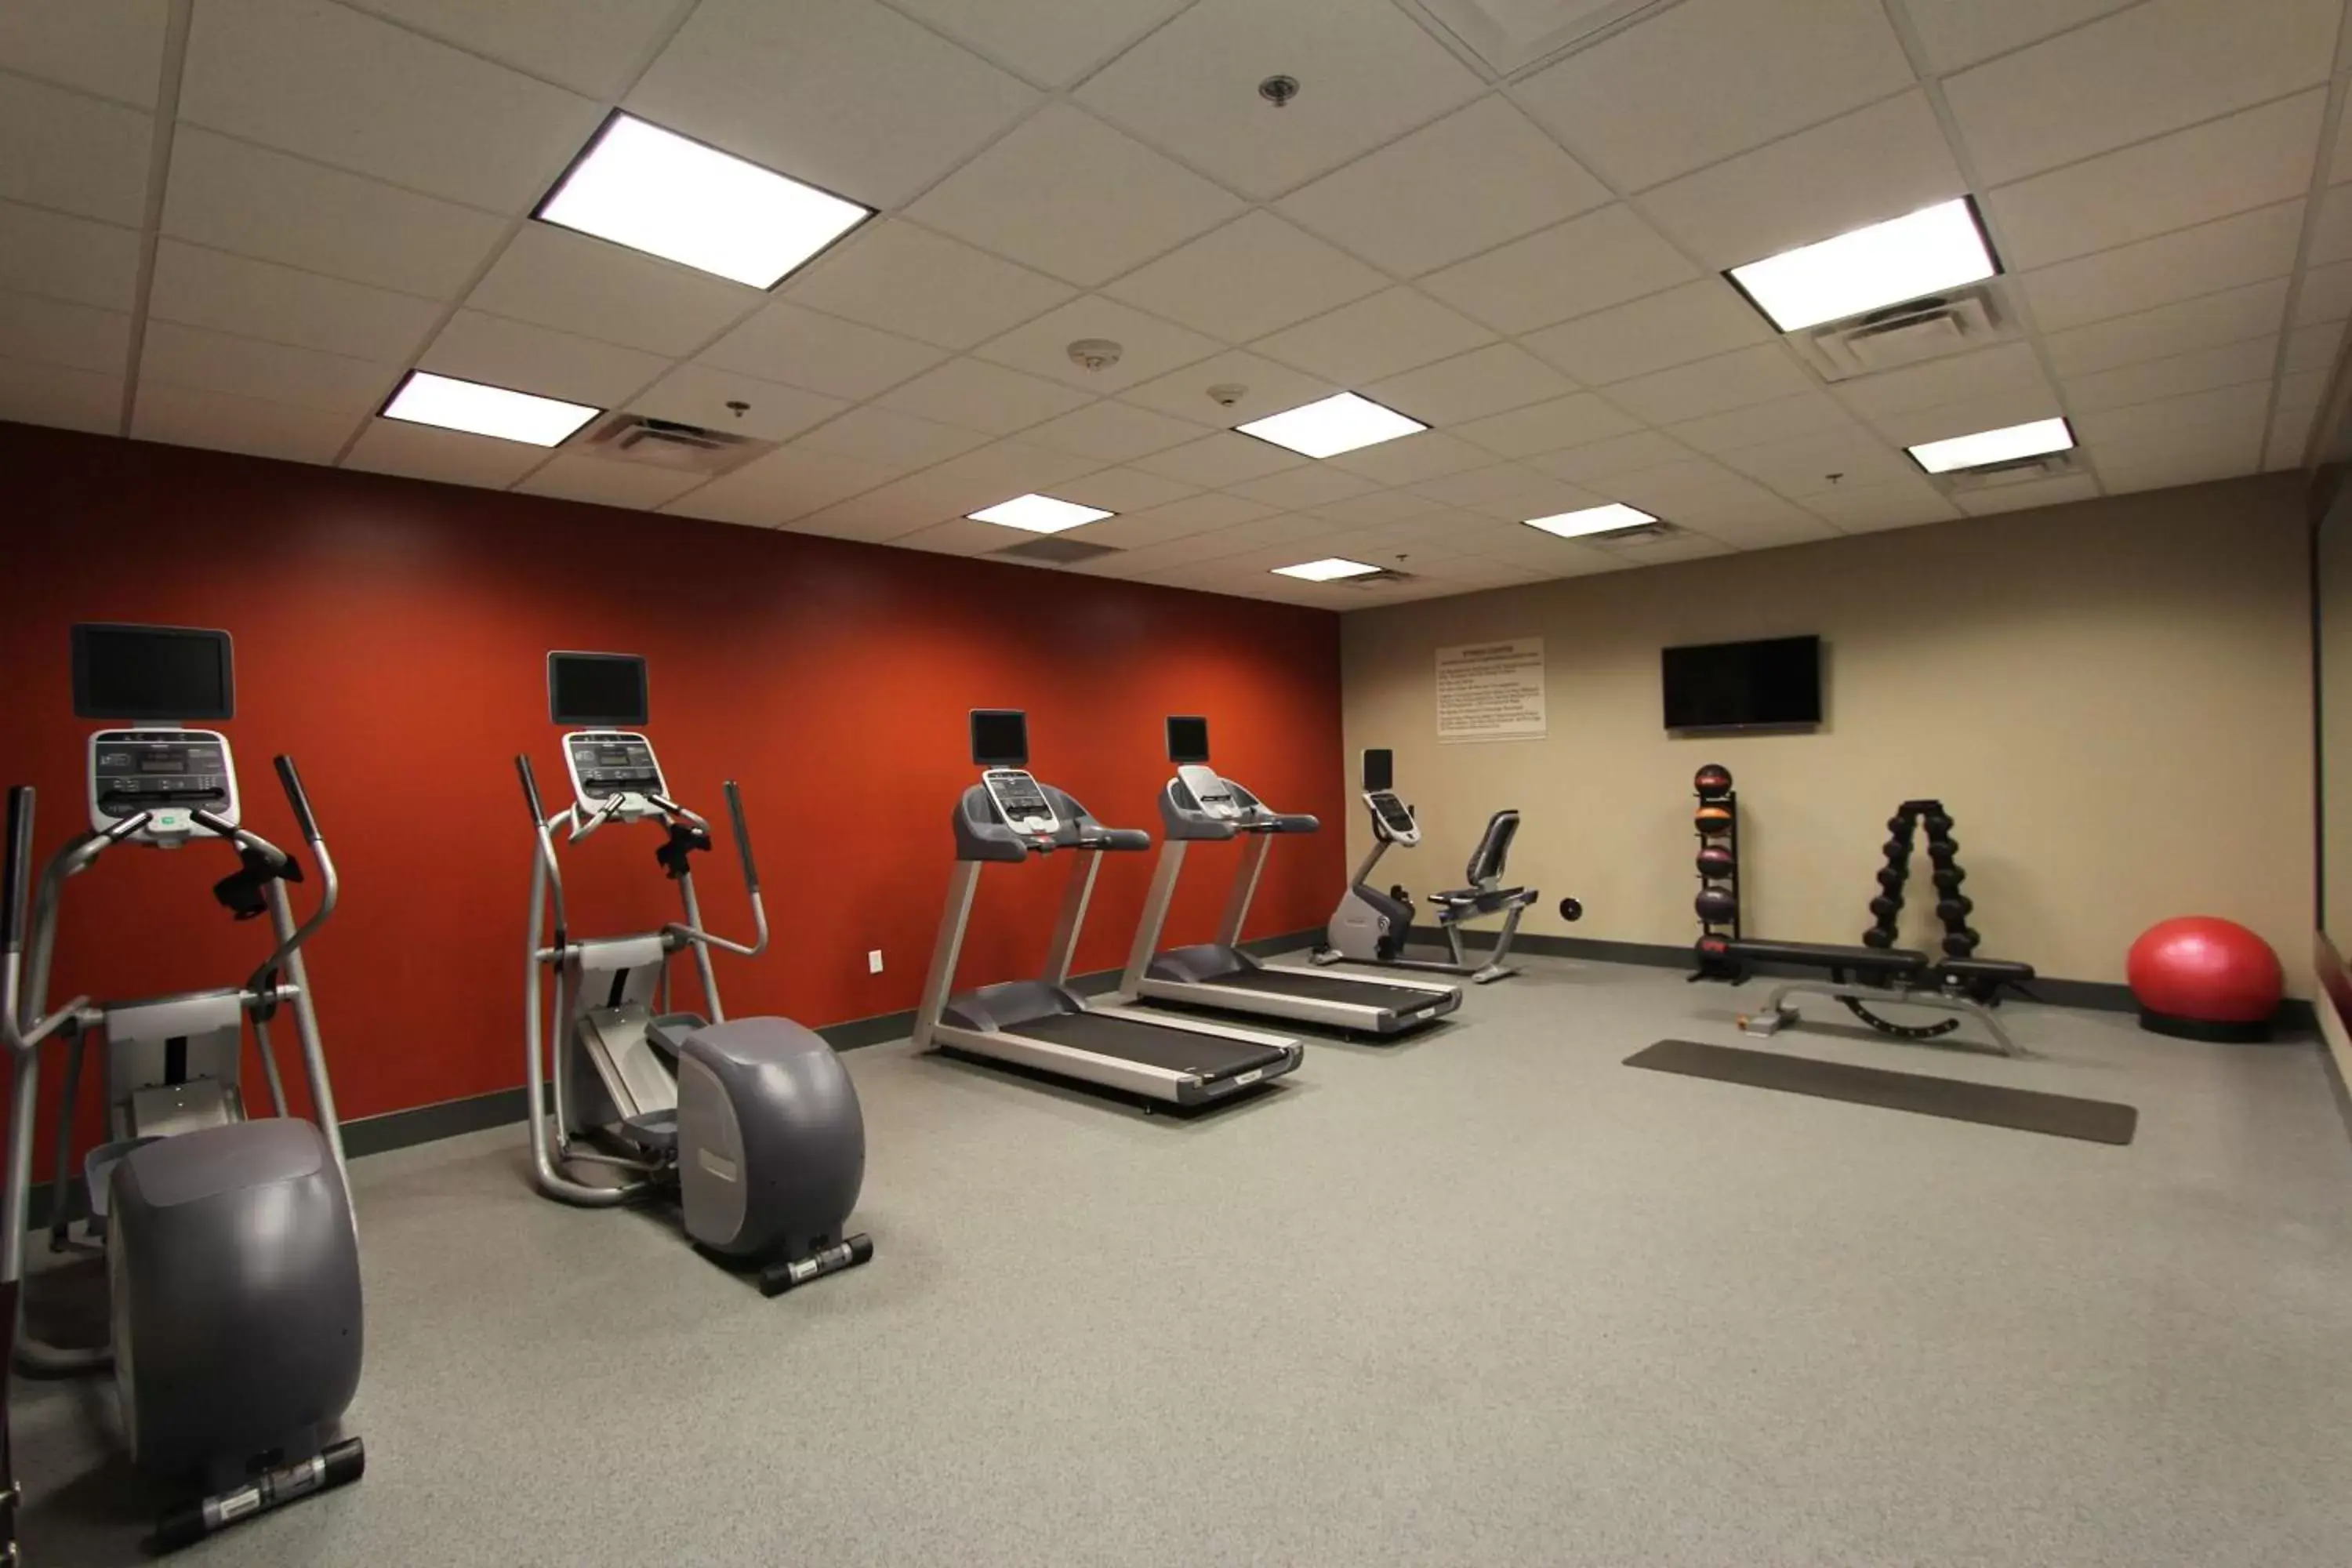 Fitness centre/facilities, Fitness Center/Facilities in Hilton Garden Inn Findlay